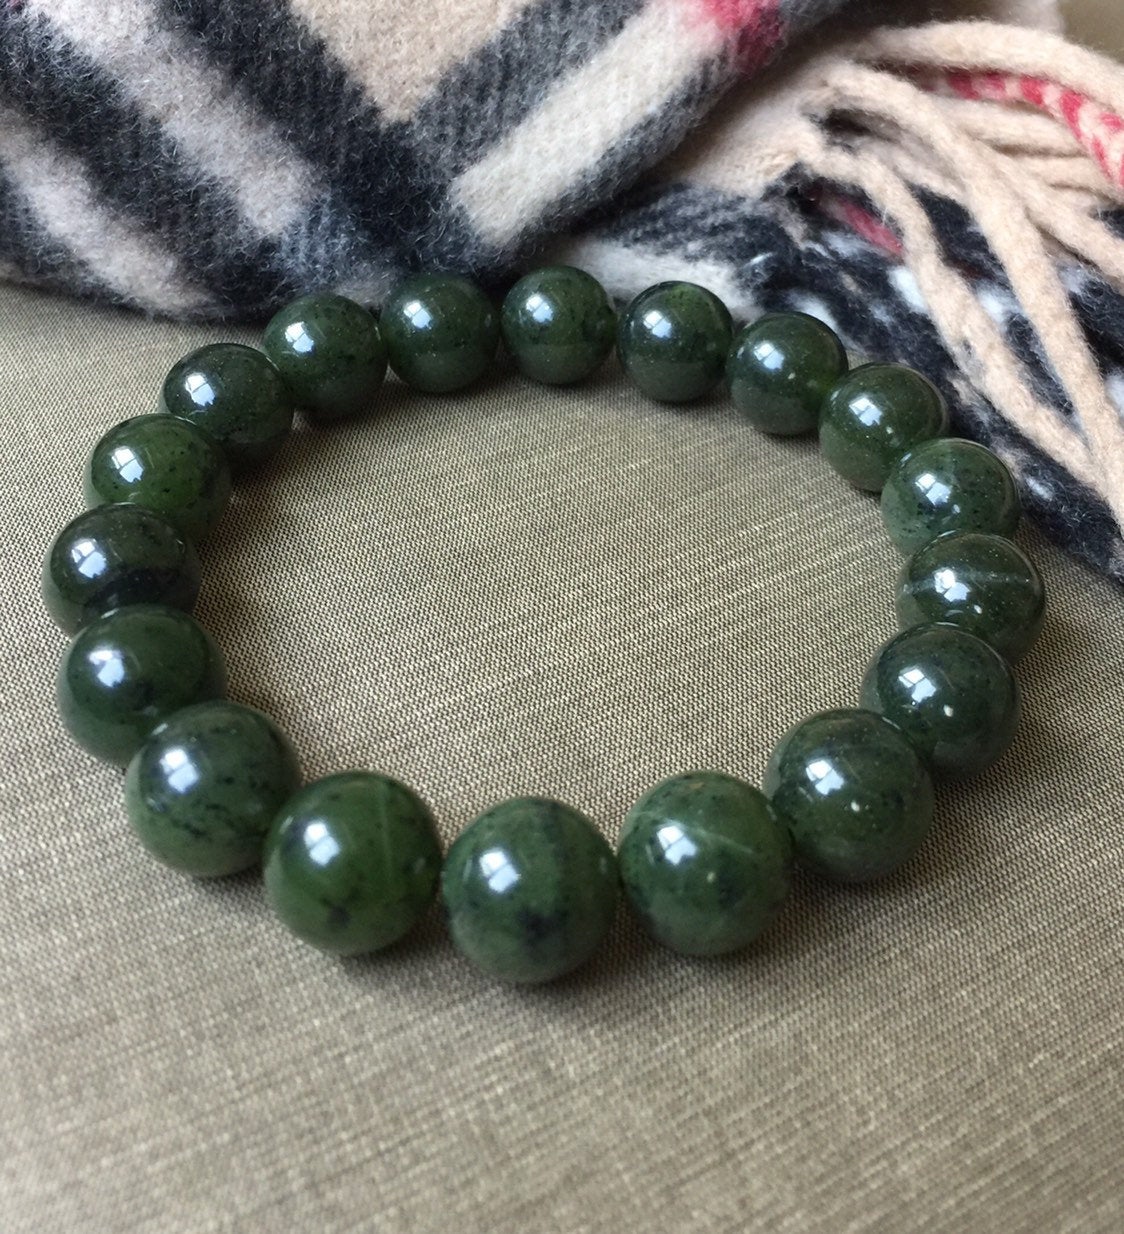 Genuine Nephrite Jade Bracelet, Canada Nephrite Jade, High Quality 10mm Canadian Nephrite Jade Beads, Mens Jade Bracelet .Father's Day Gift. Unisex.